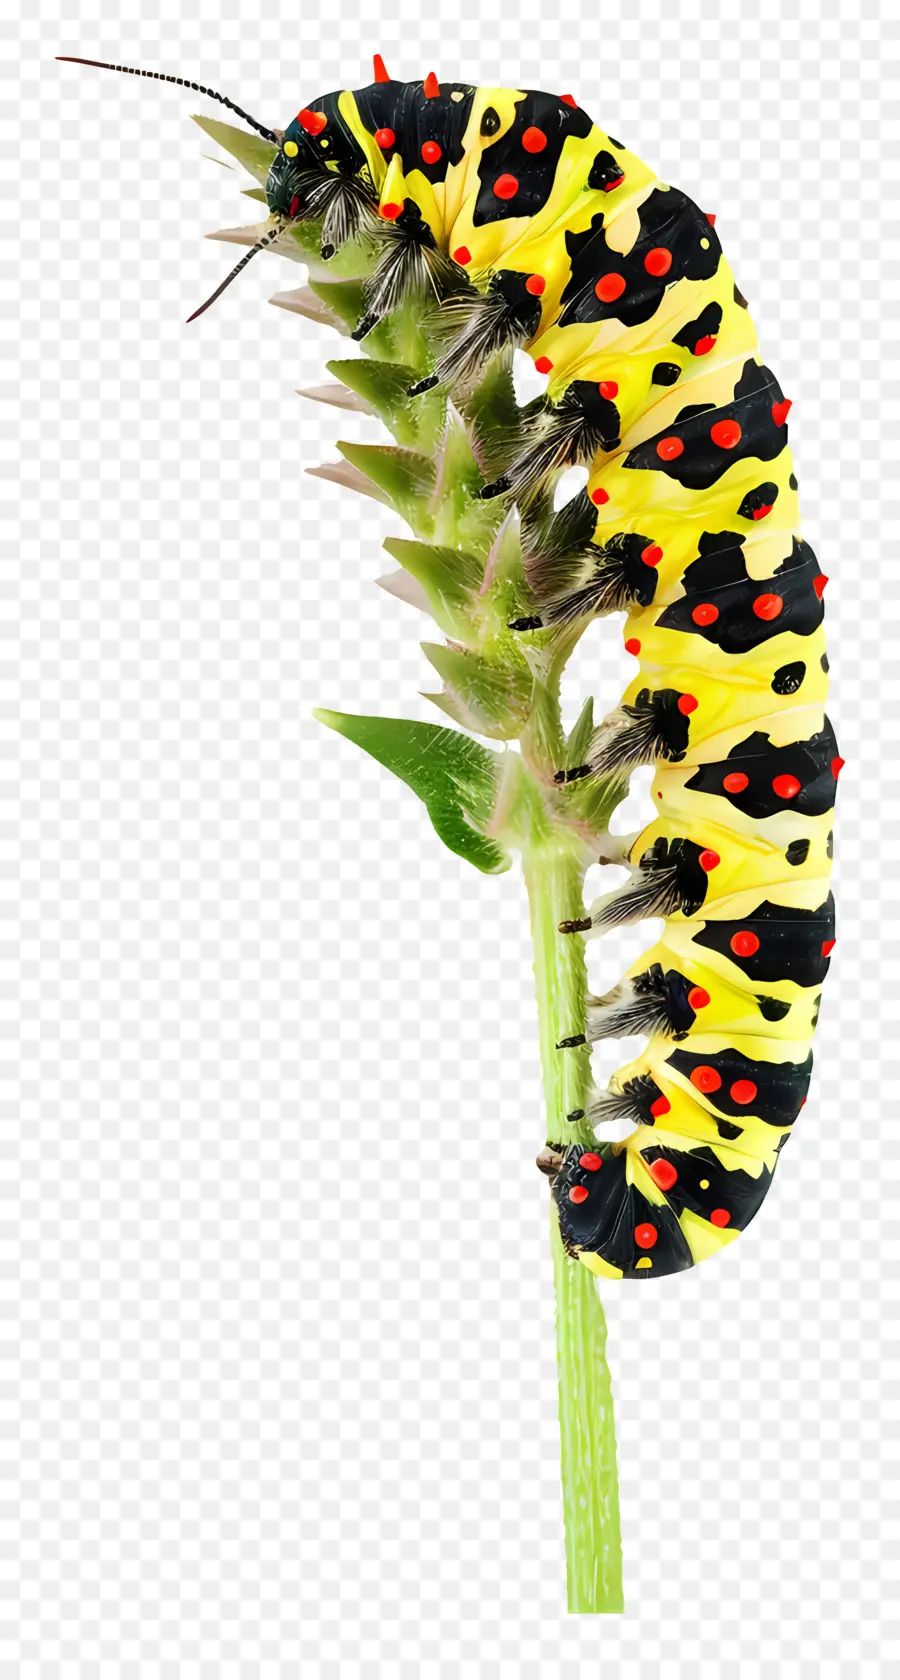 caterpillar insects garden nature wildlife